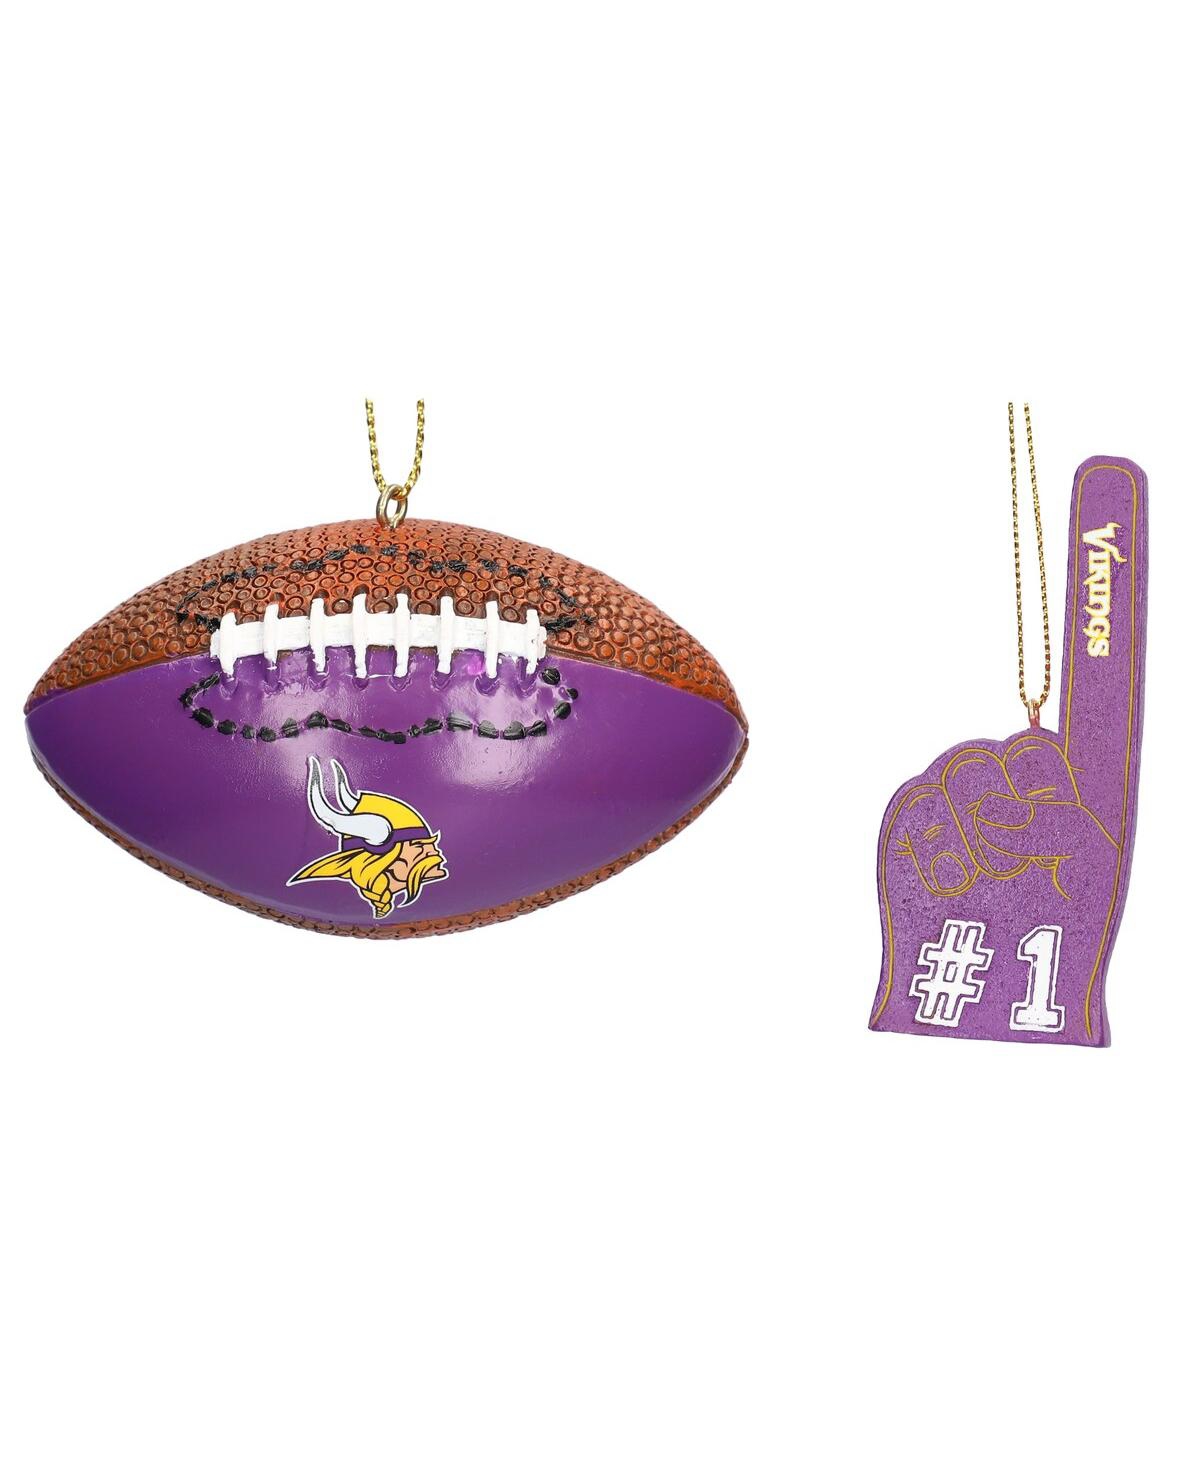 The Memory Company Minnesota Vikings Football and Foam Finger Ornament Two-Pack - Multi